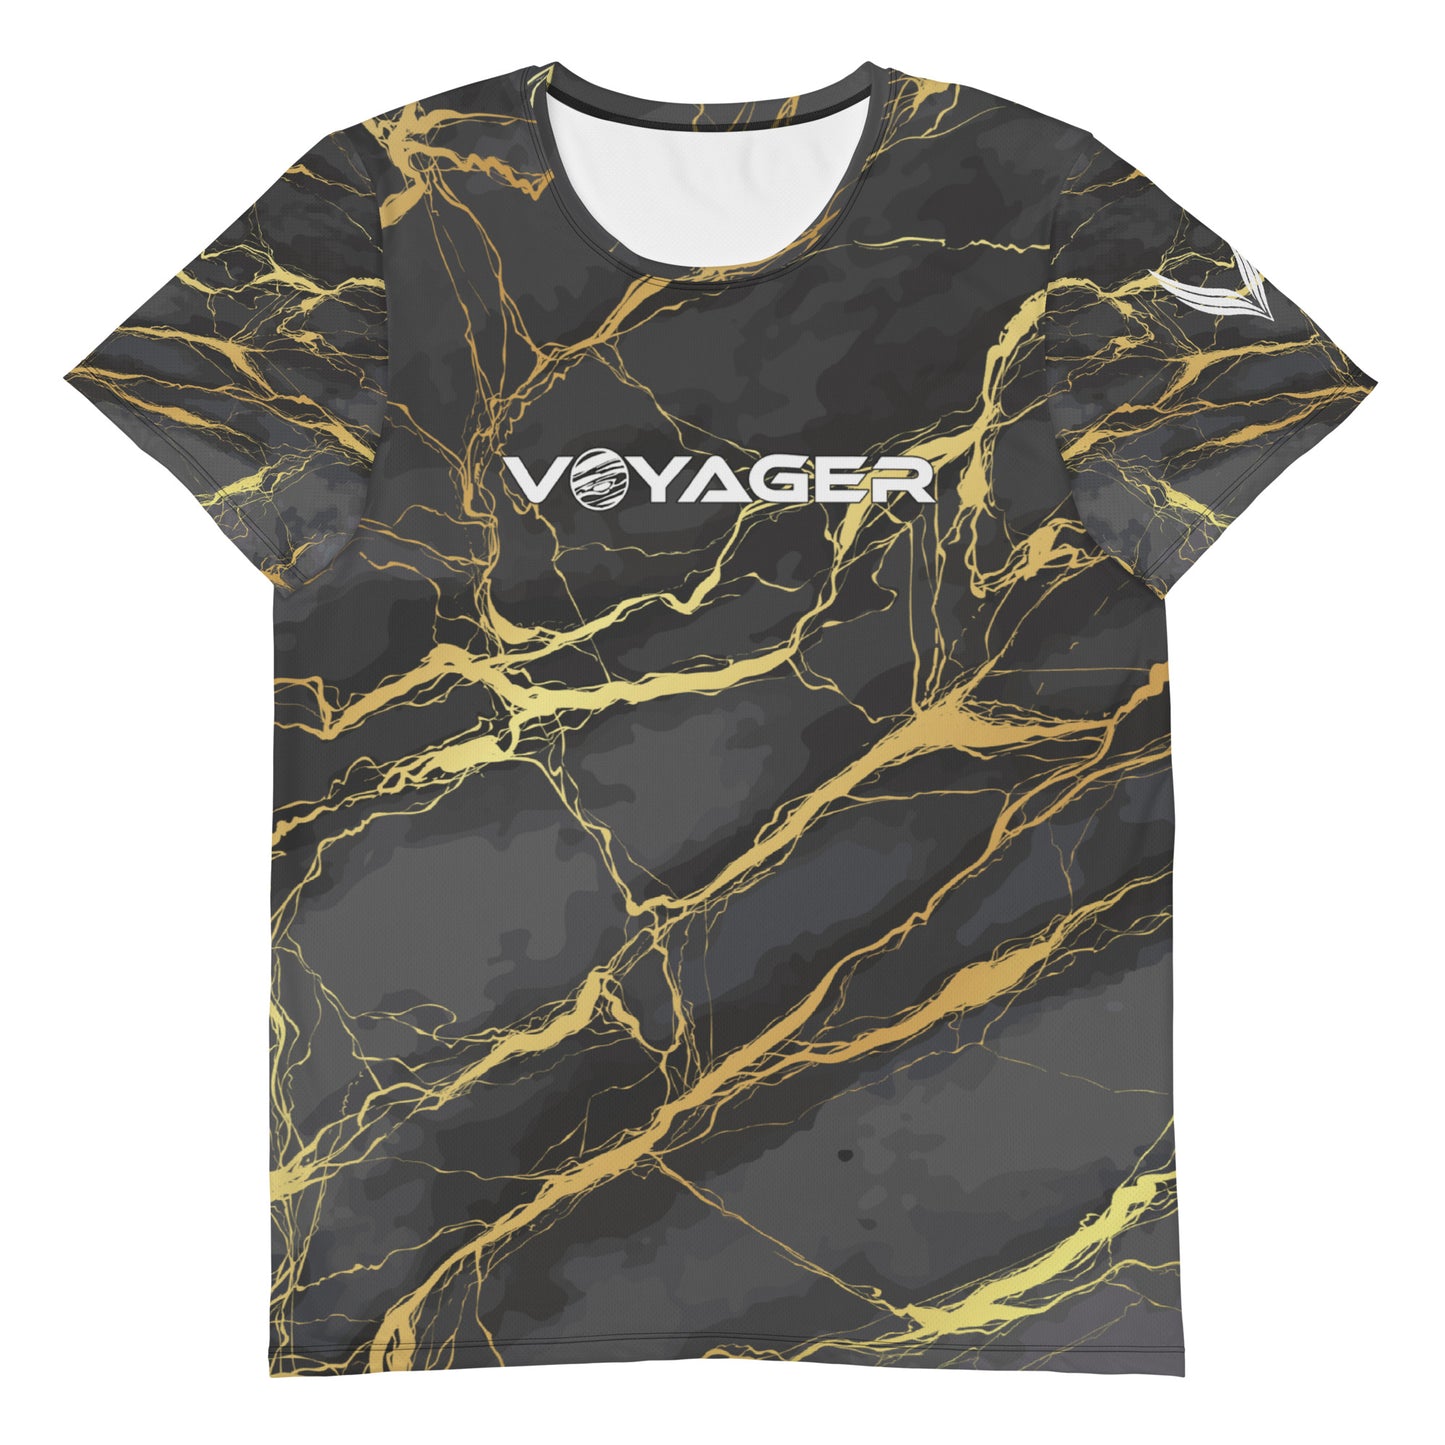 Voyager Gold Vein Short Sleeve Performance Shirt - Unisex